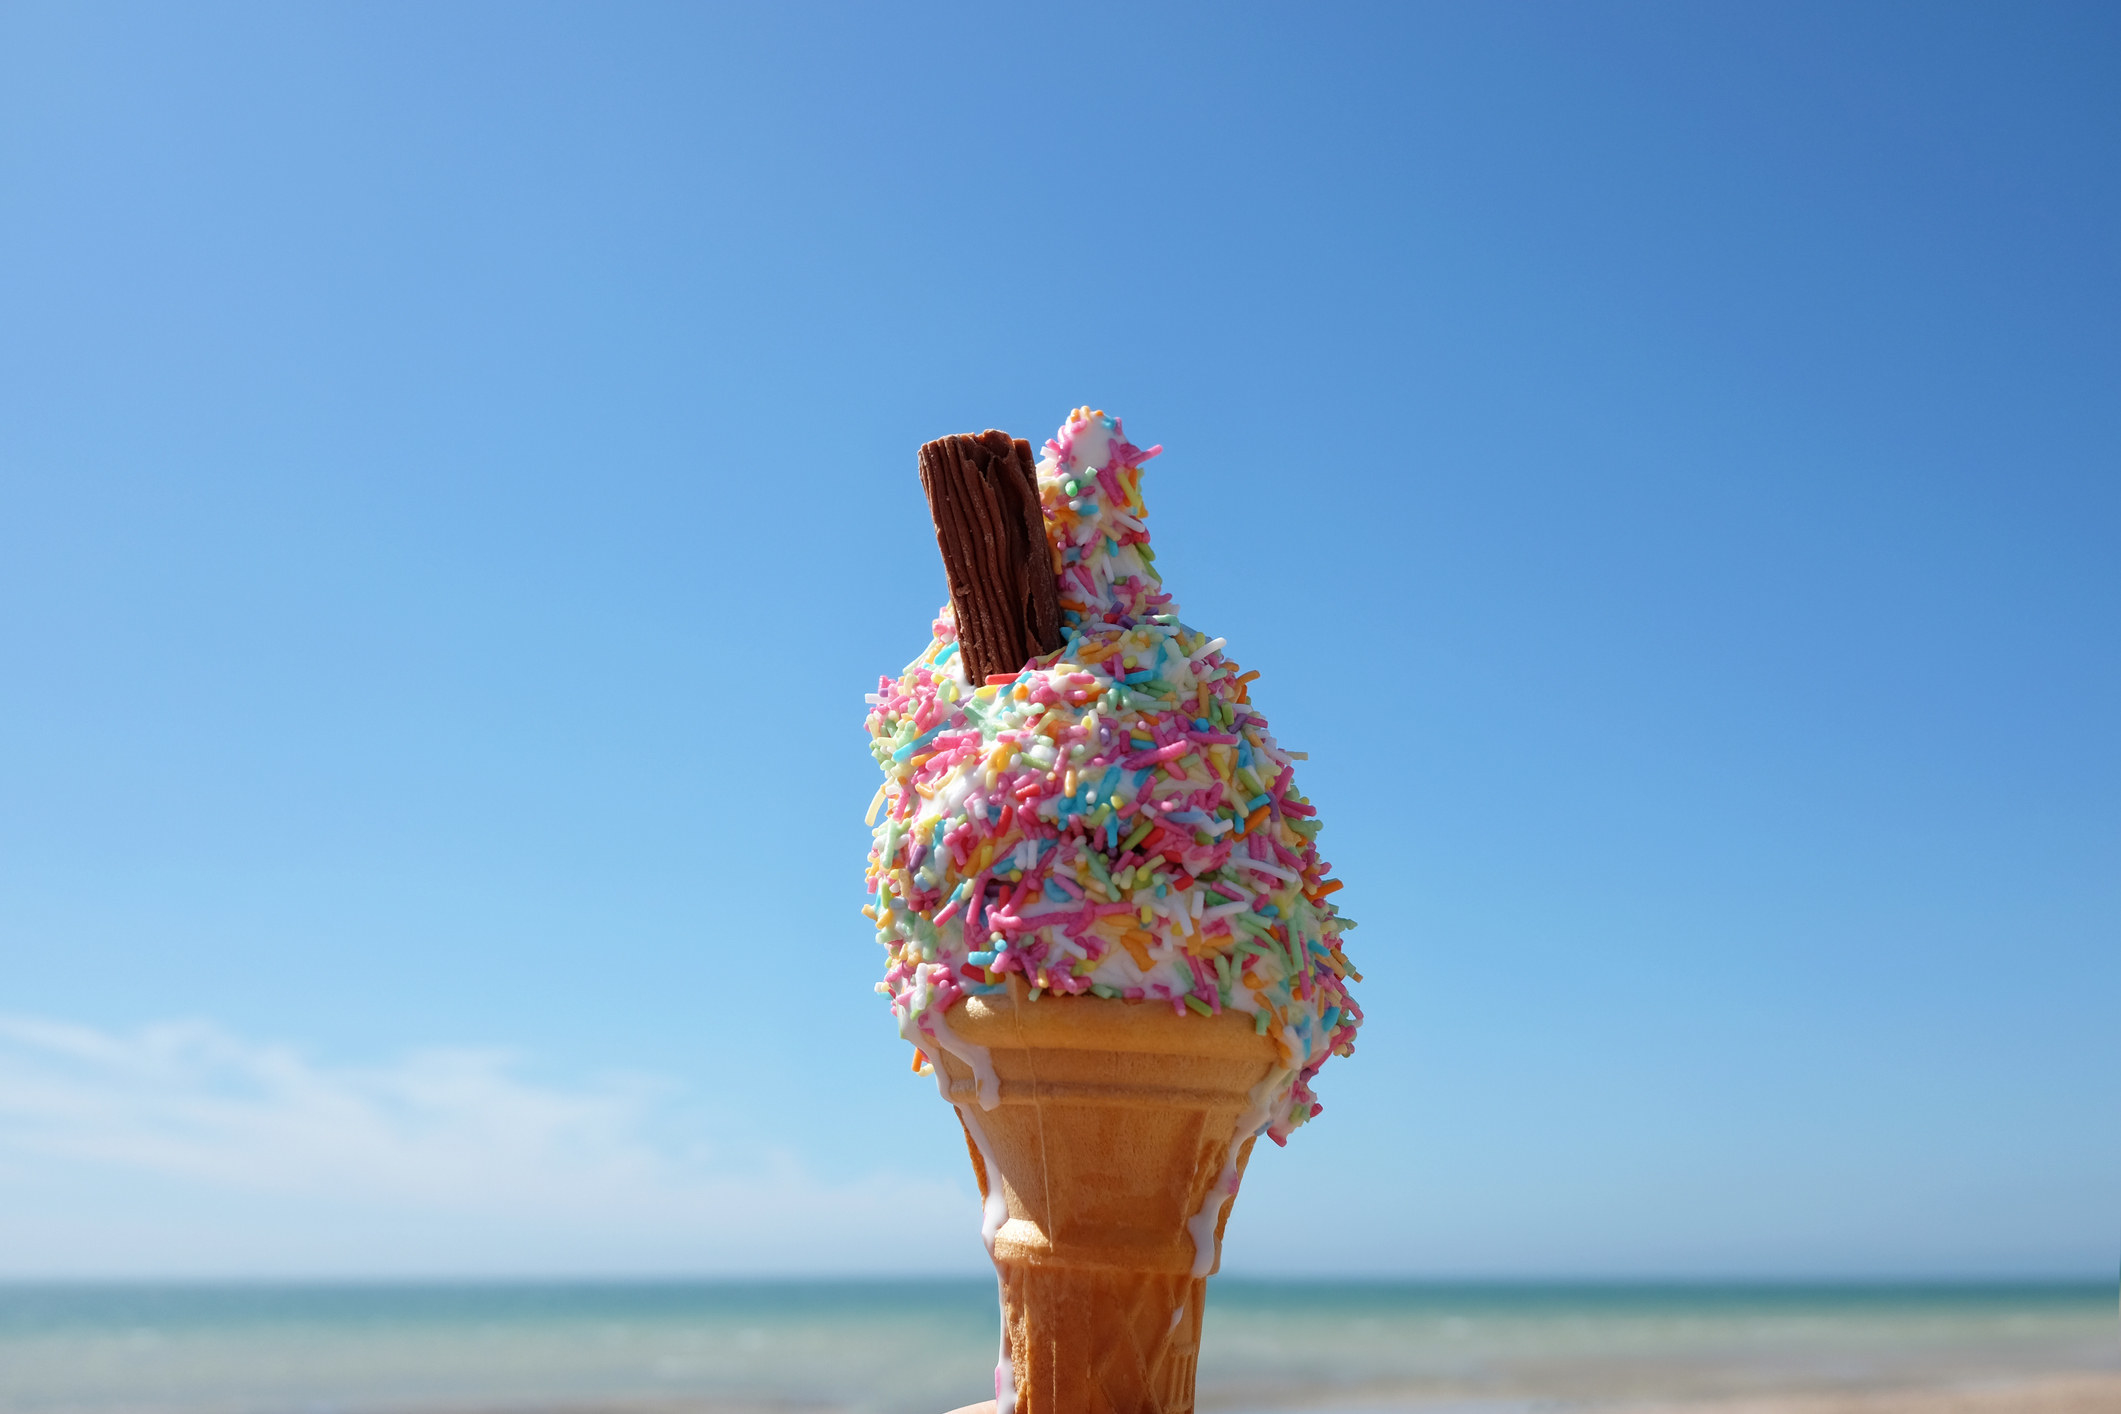 Seaside beach summer ice cream cone with sprinkles